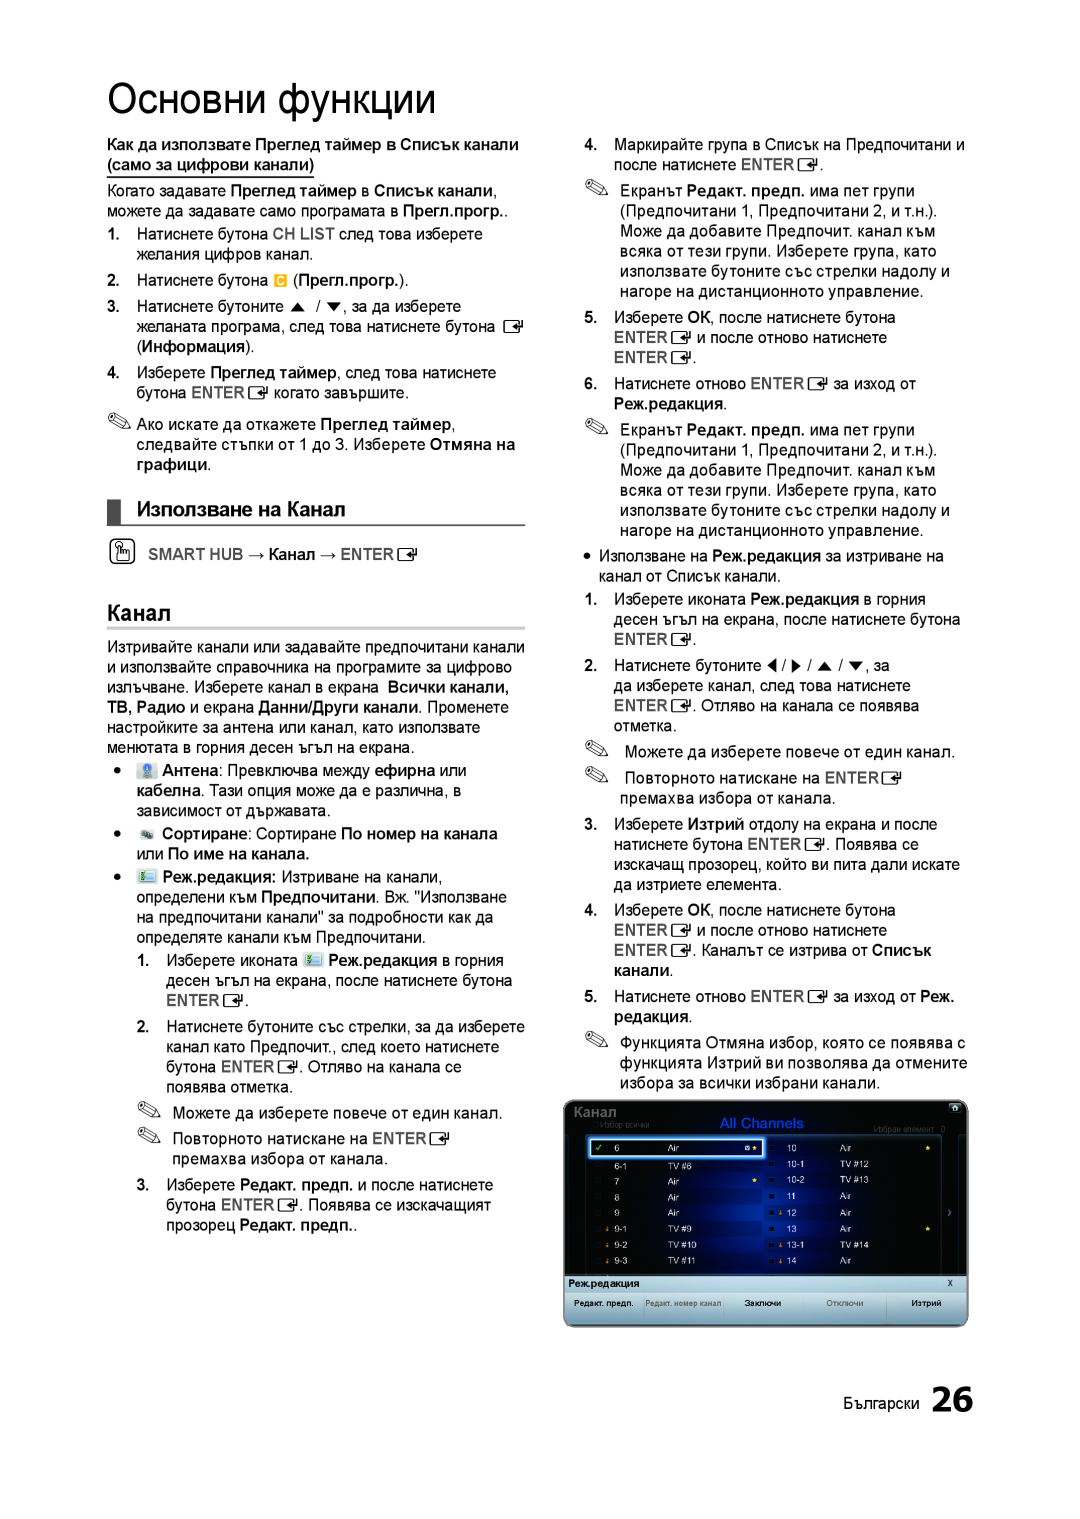 Samsung LT27A950EX/EN manual Използване на Канал, Основни функции, OO SMART HUB → Канал → ENTERE, Entere, редакция 